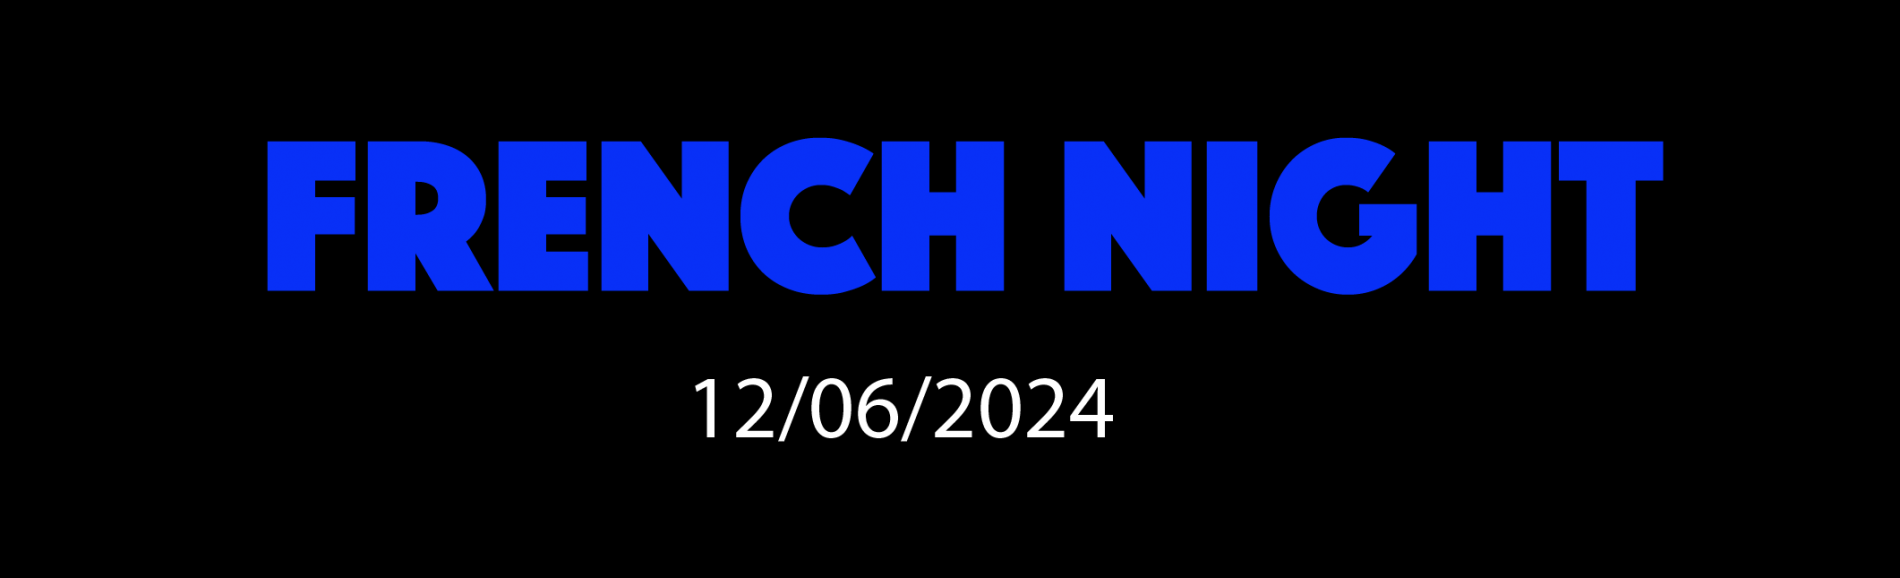 FRENCH NIGHT 12/06/2024